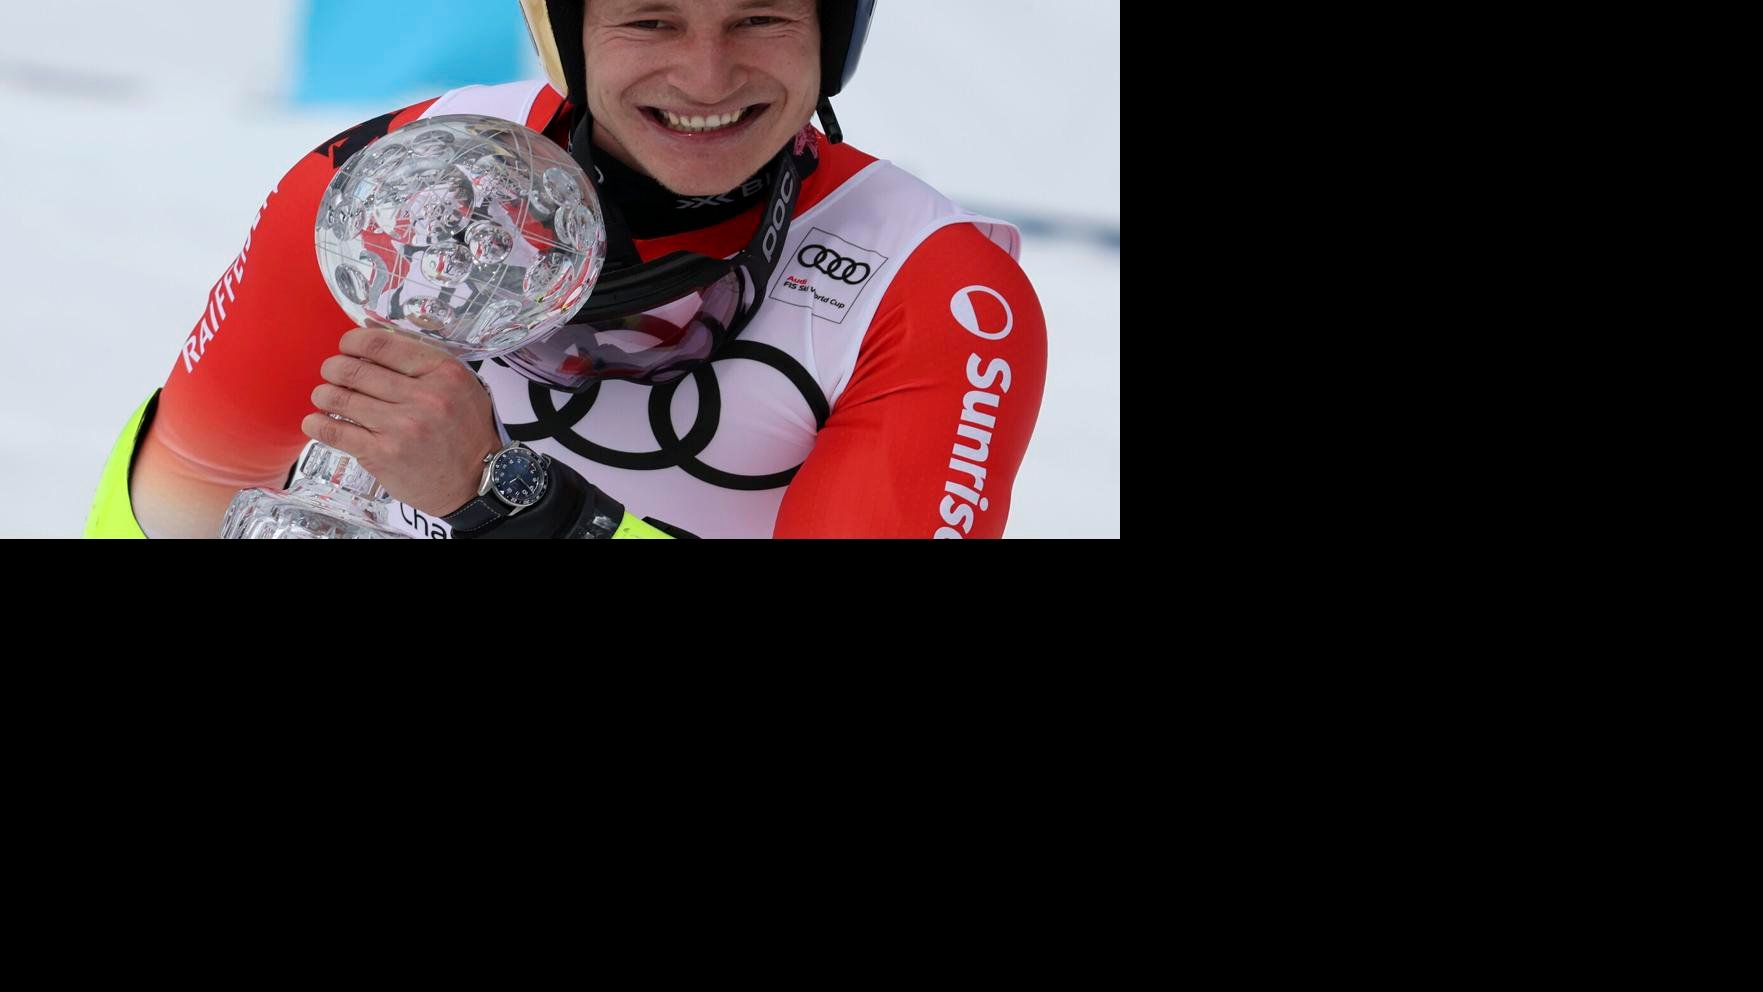 Swiss skier Odermatt wins GS, sets World Cup points record